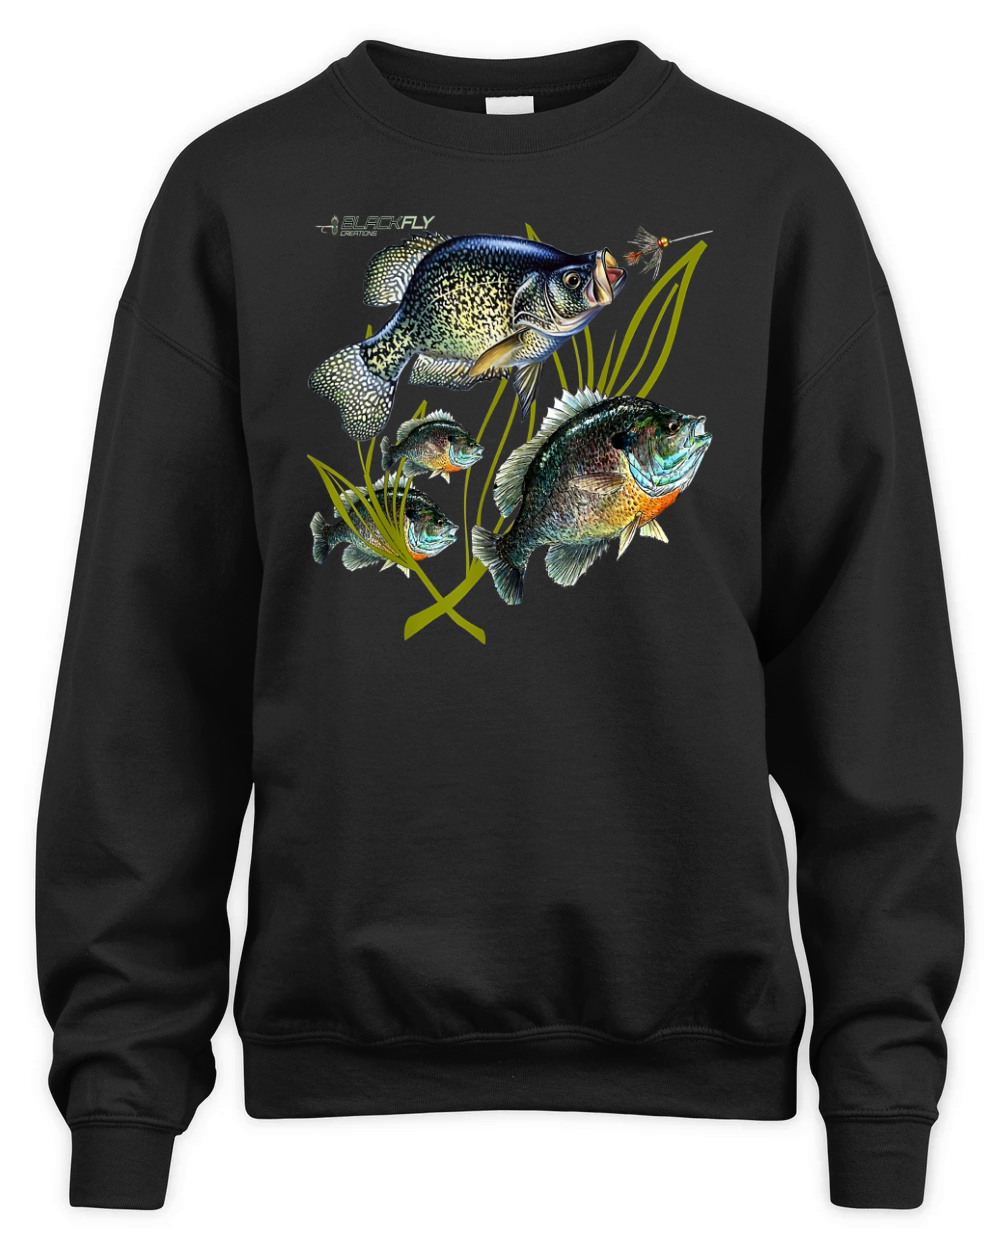 Black Fly Crappie Bluegill Fishing Panfish Flies Jig Unisex Premium  Crewneck Sweatshirt - Designed by Pravnkumar Gajera